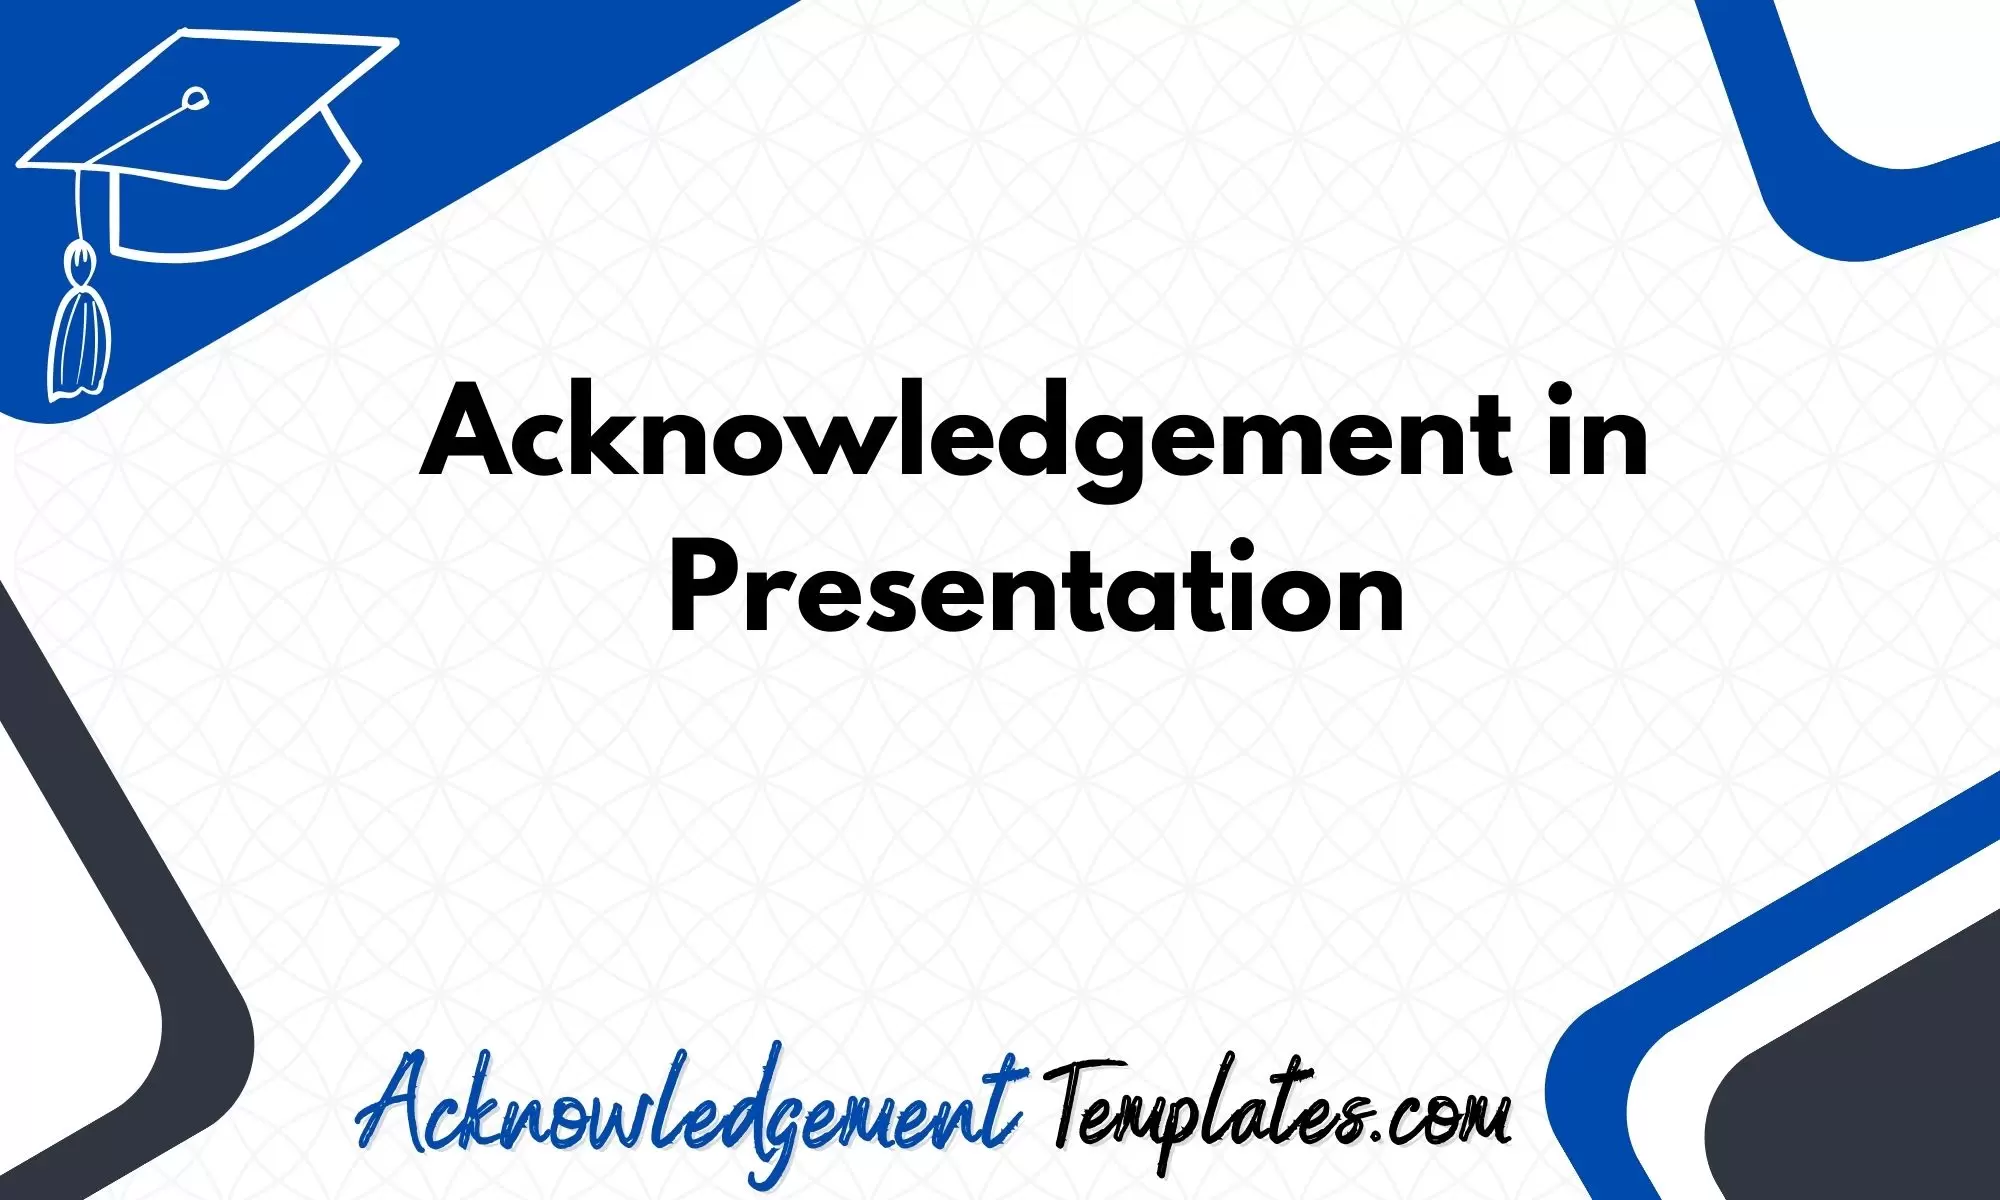 Acknowledgement in Presentation